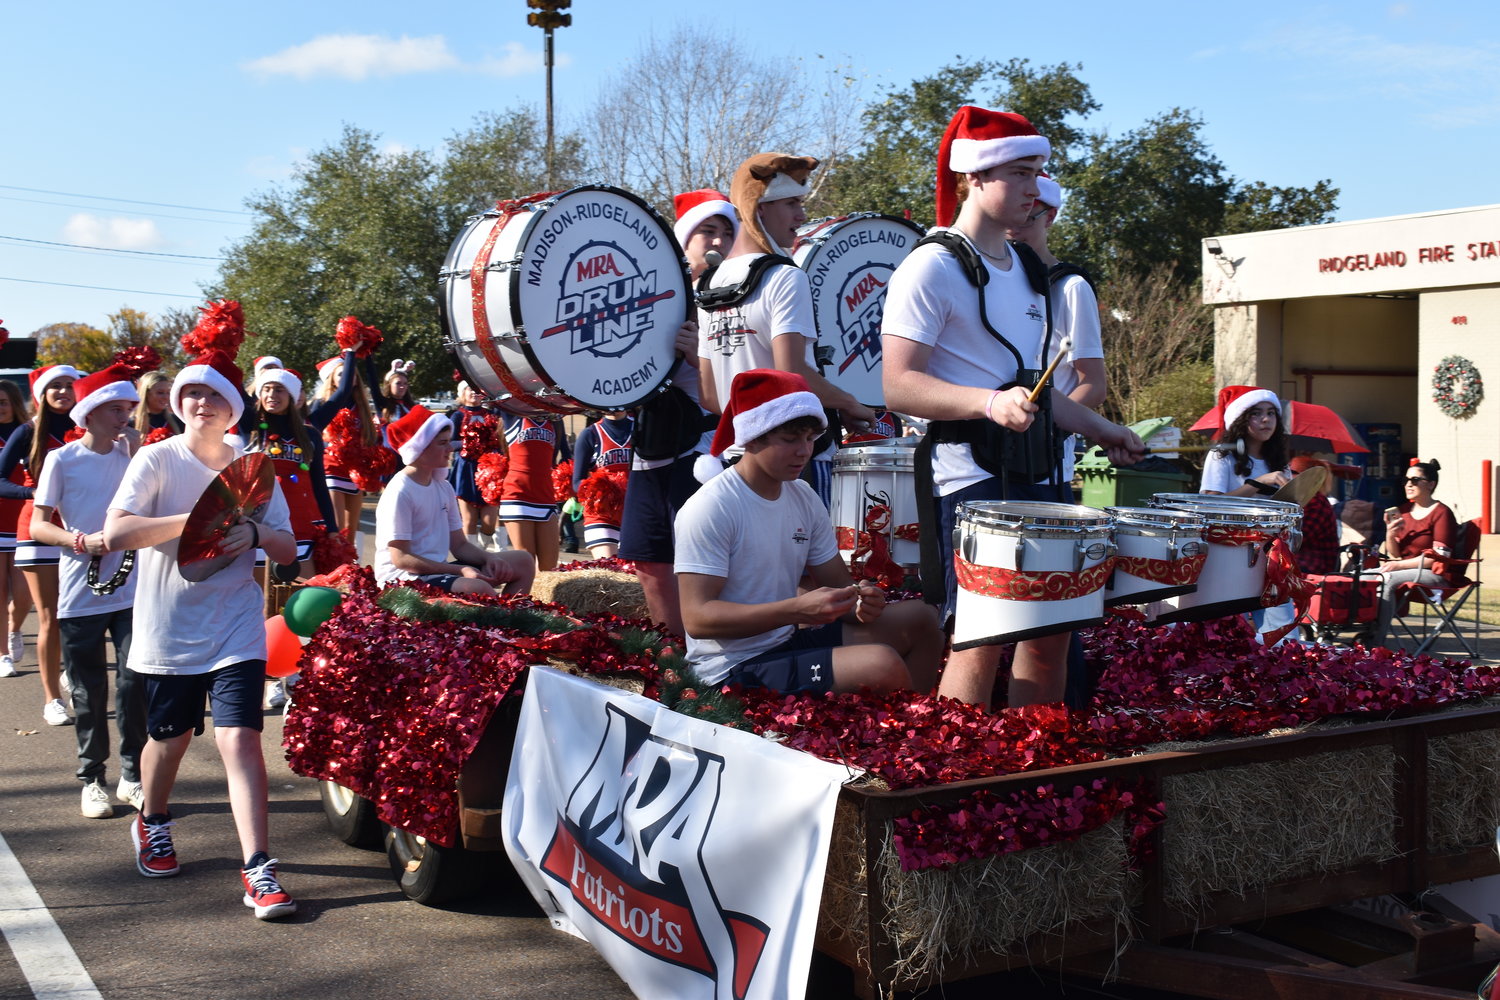 The Madison-Ridgeland Academy drumline performed in both the Madison the City and city of Ridgeland Christmas parades on Saturday.